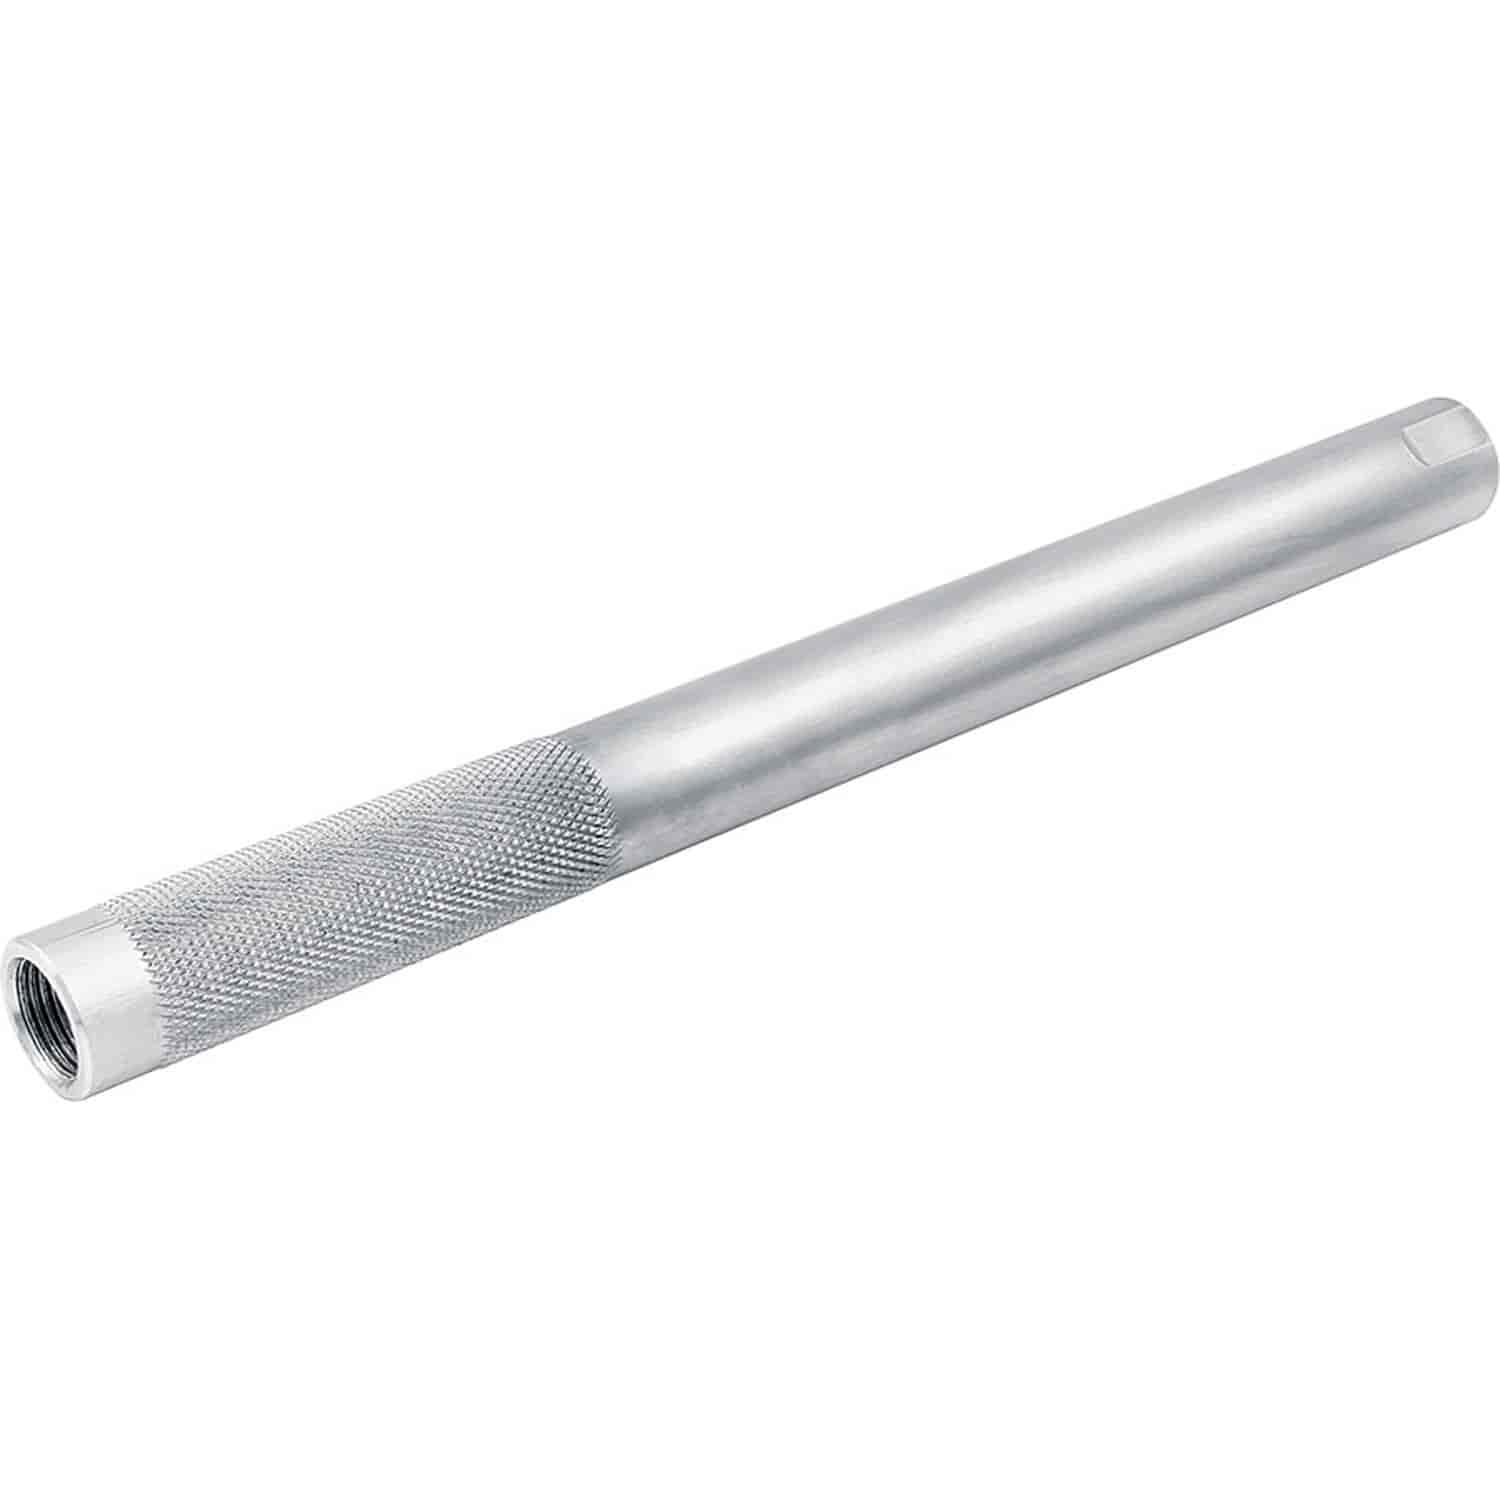 Swedged Aluminum Tie Rod Tube Length: 10